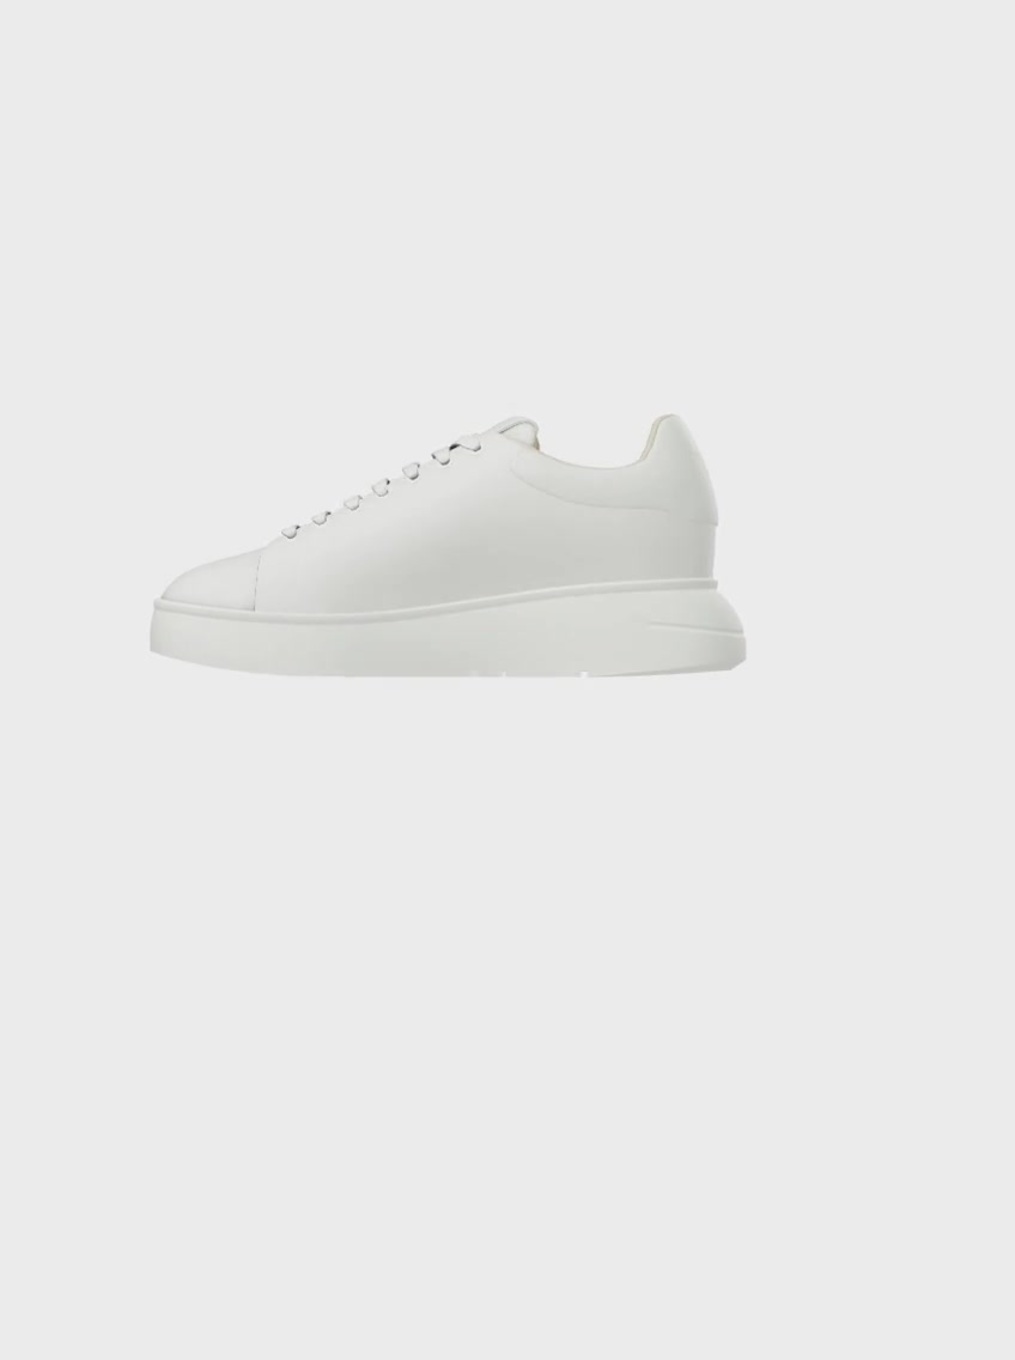 Emporio Armani - Leather Sneakers with Borgonuovo Milano Logo, 100% Bovine Leather, White, Size: 39